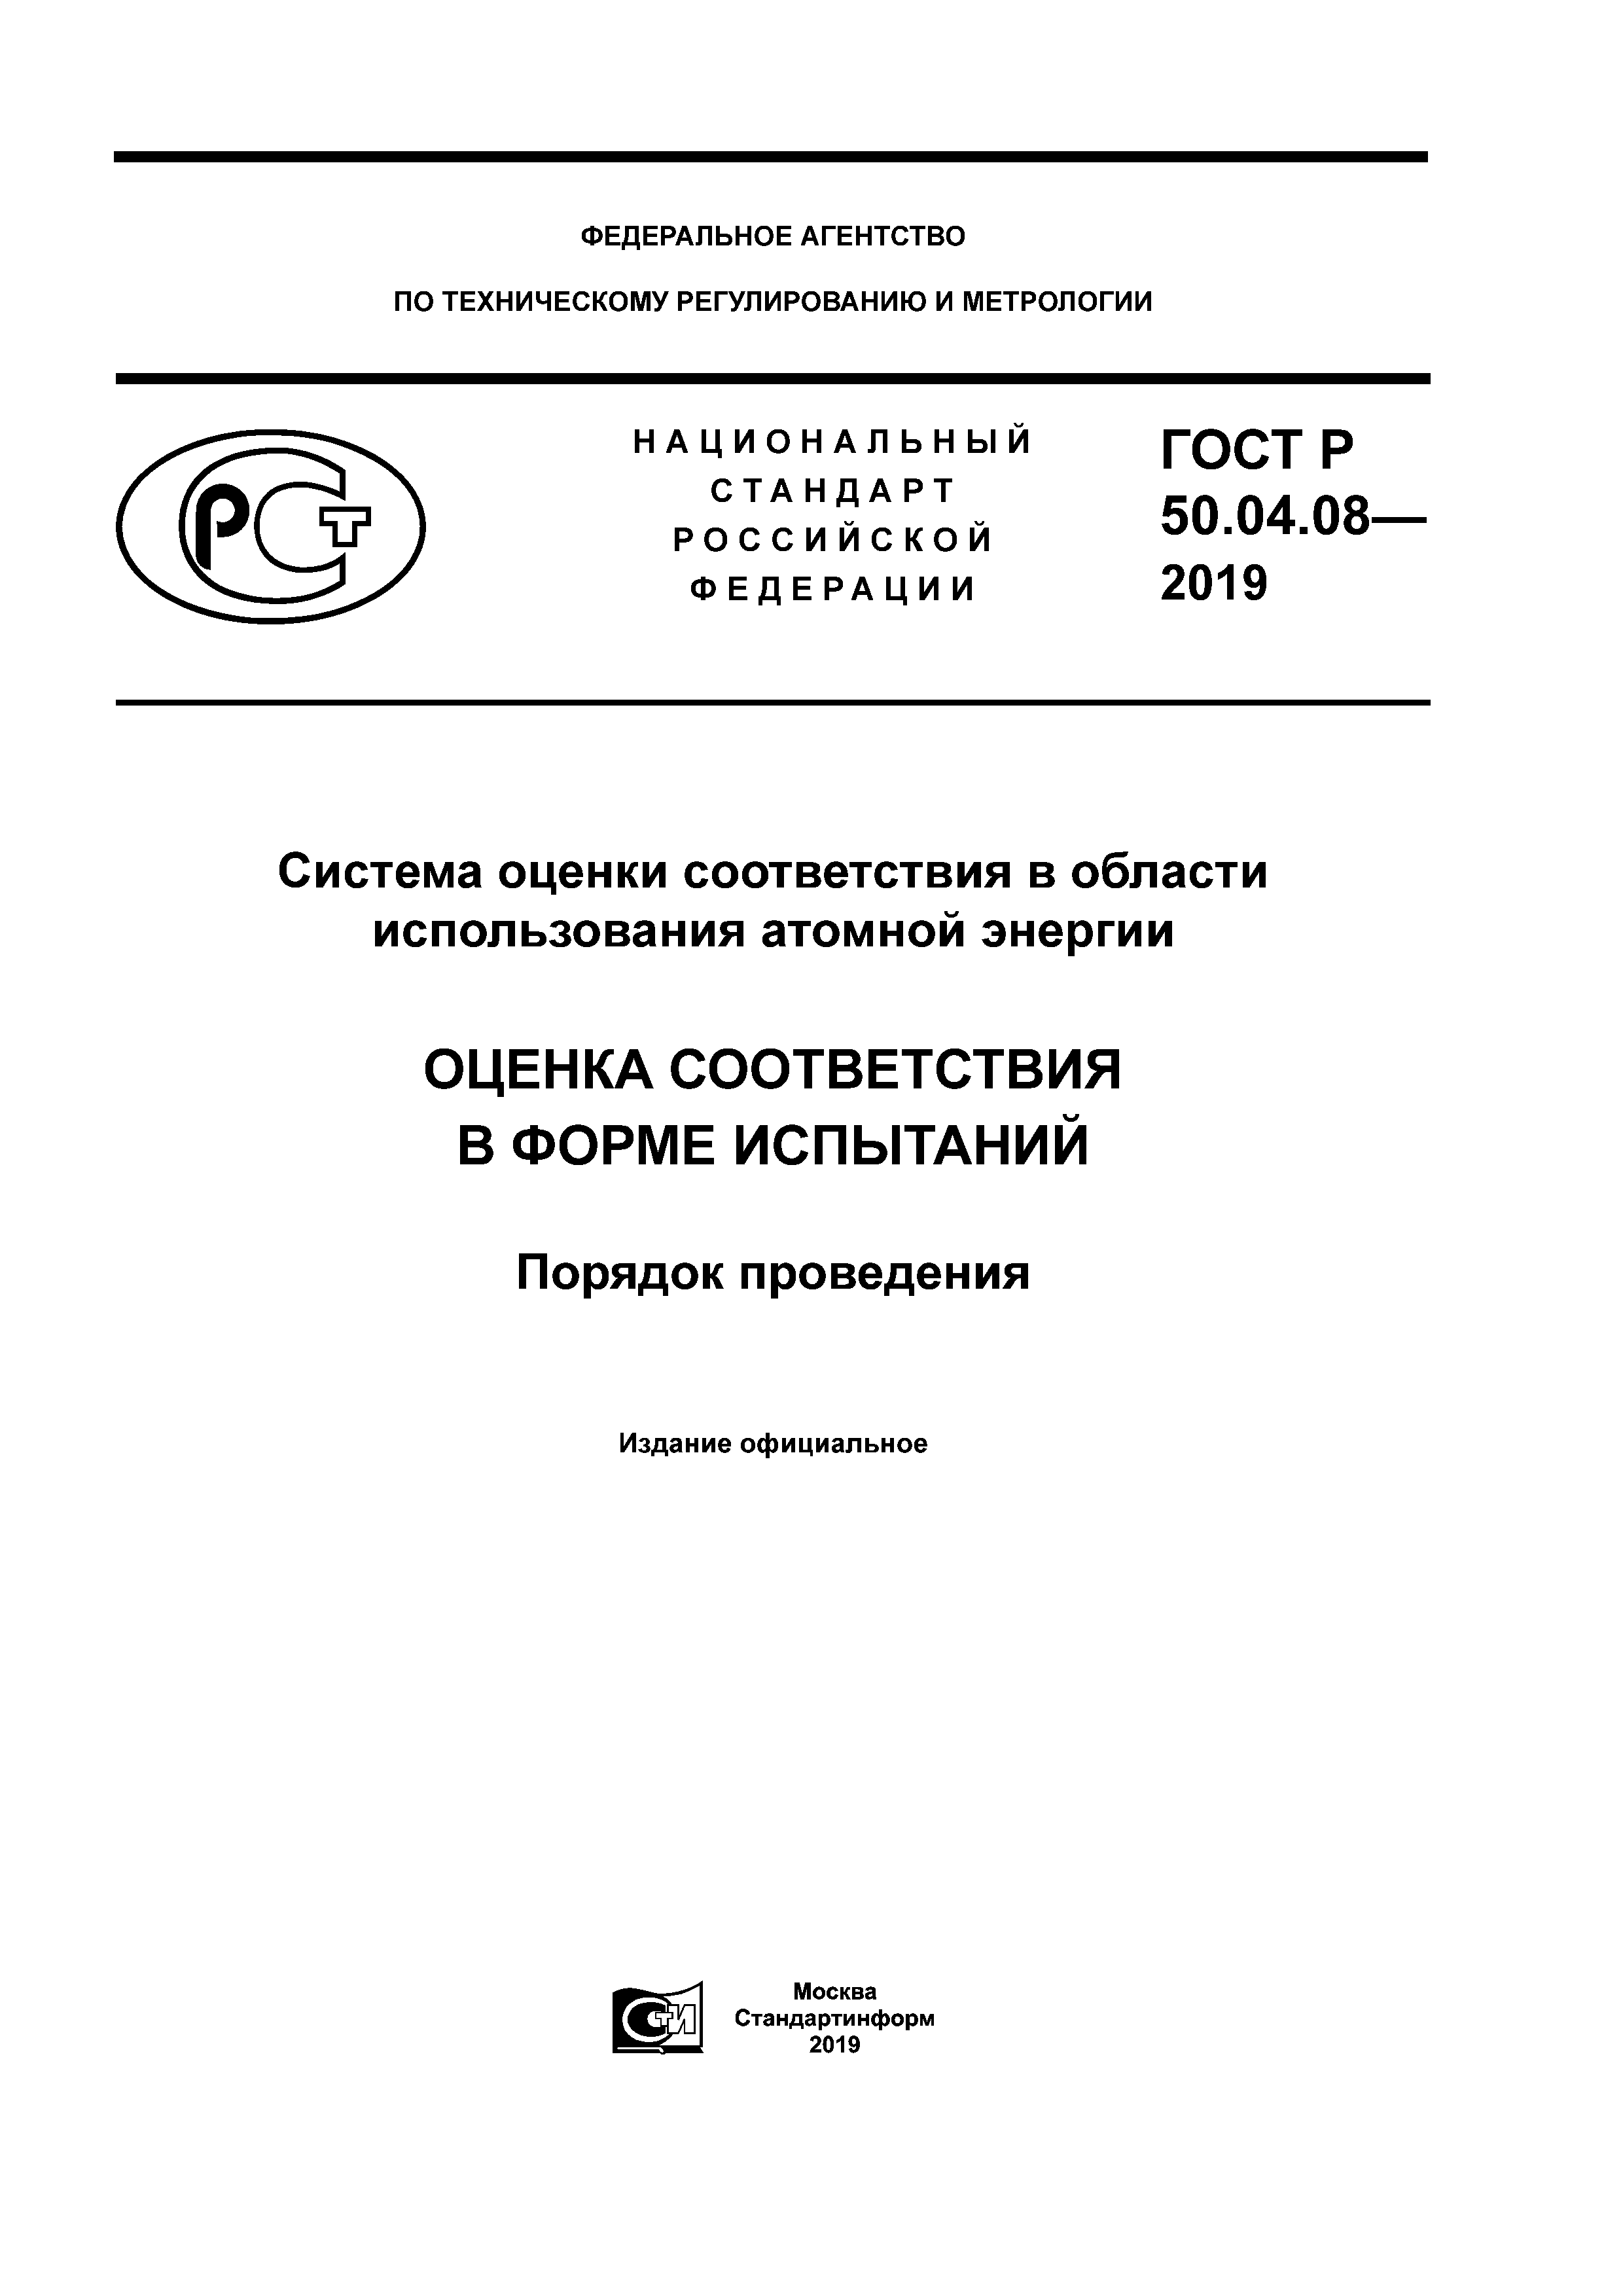 ГОСТ Р 50.04.08-2019